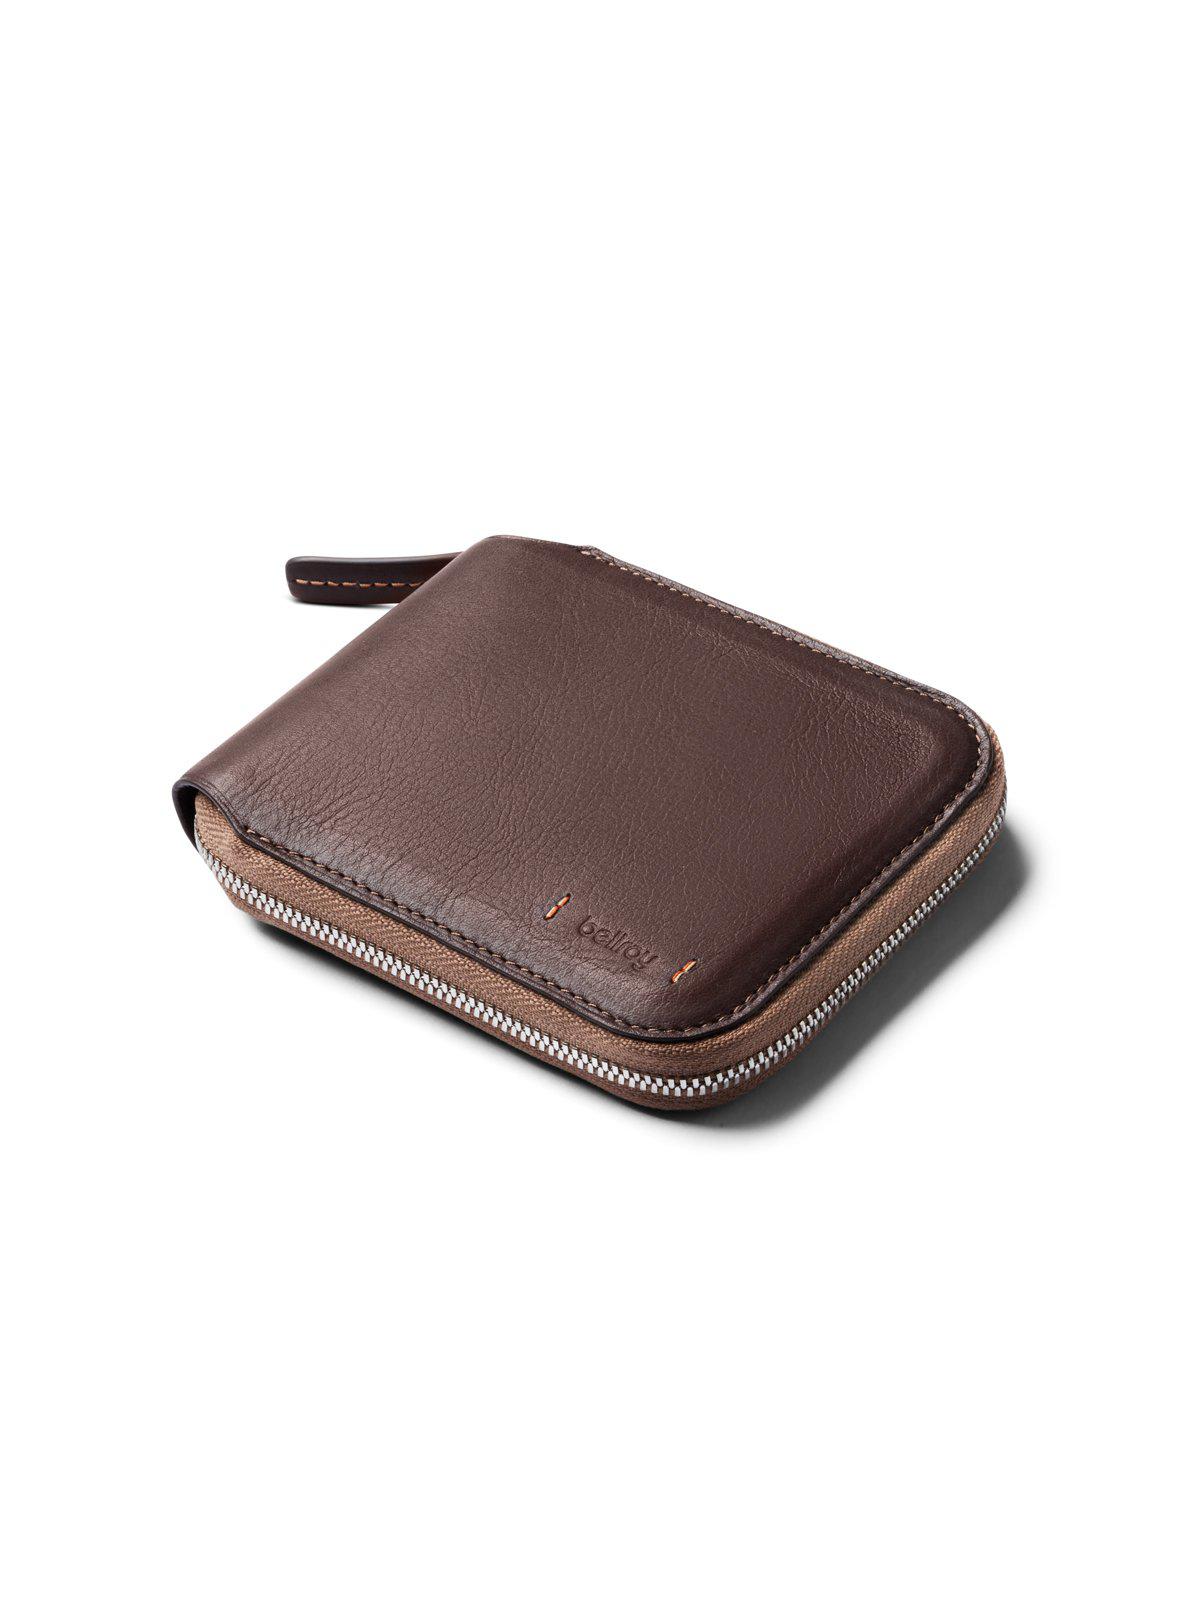 Bellroy Zip Wallet Premium Edition Aragon RFID